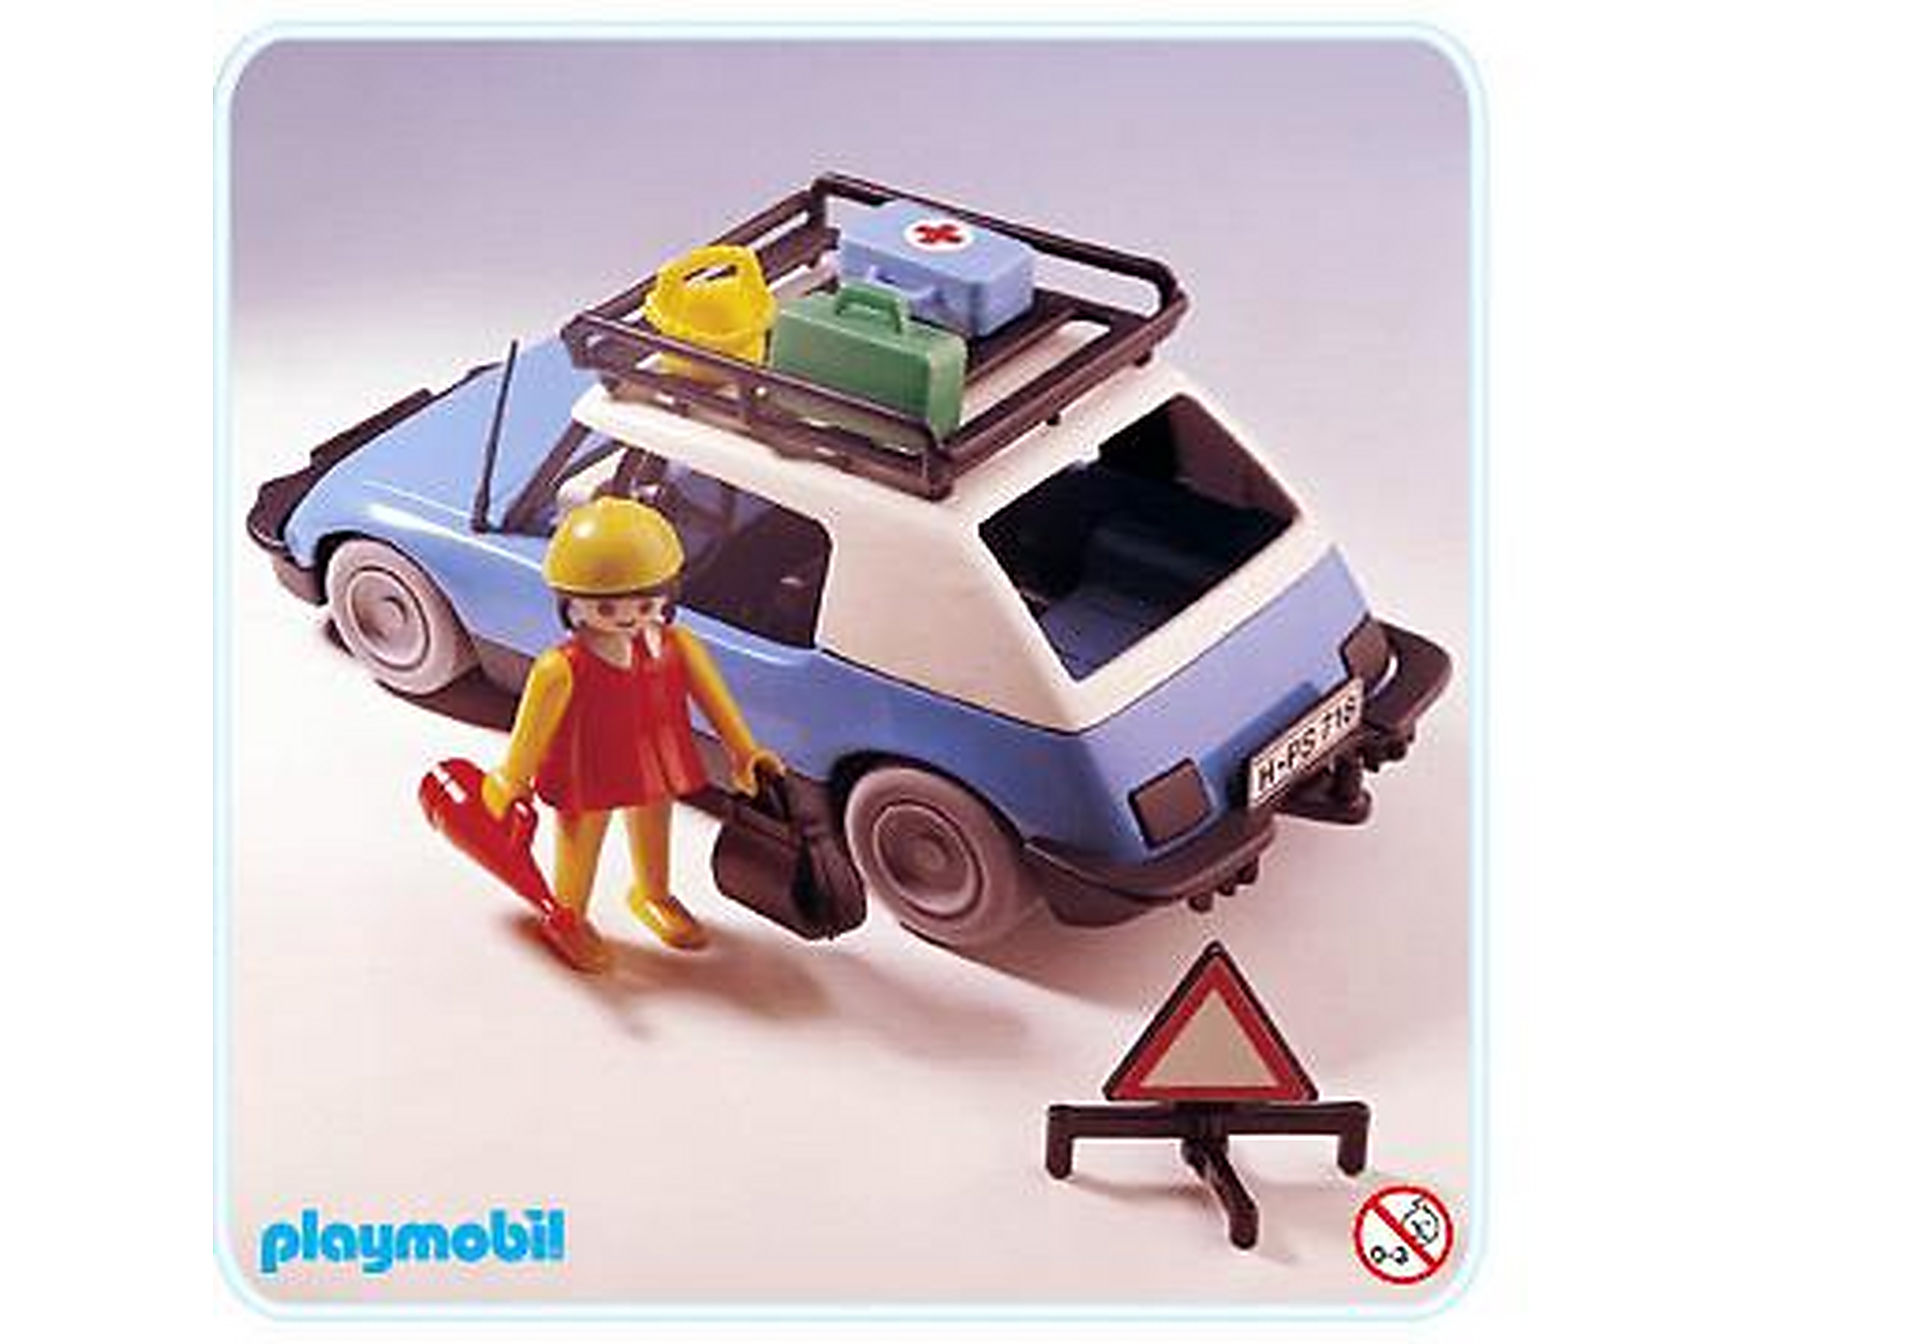 Playmobil Reise